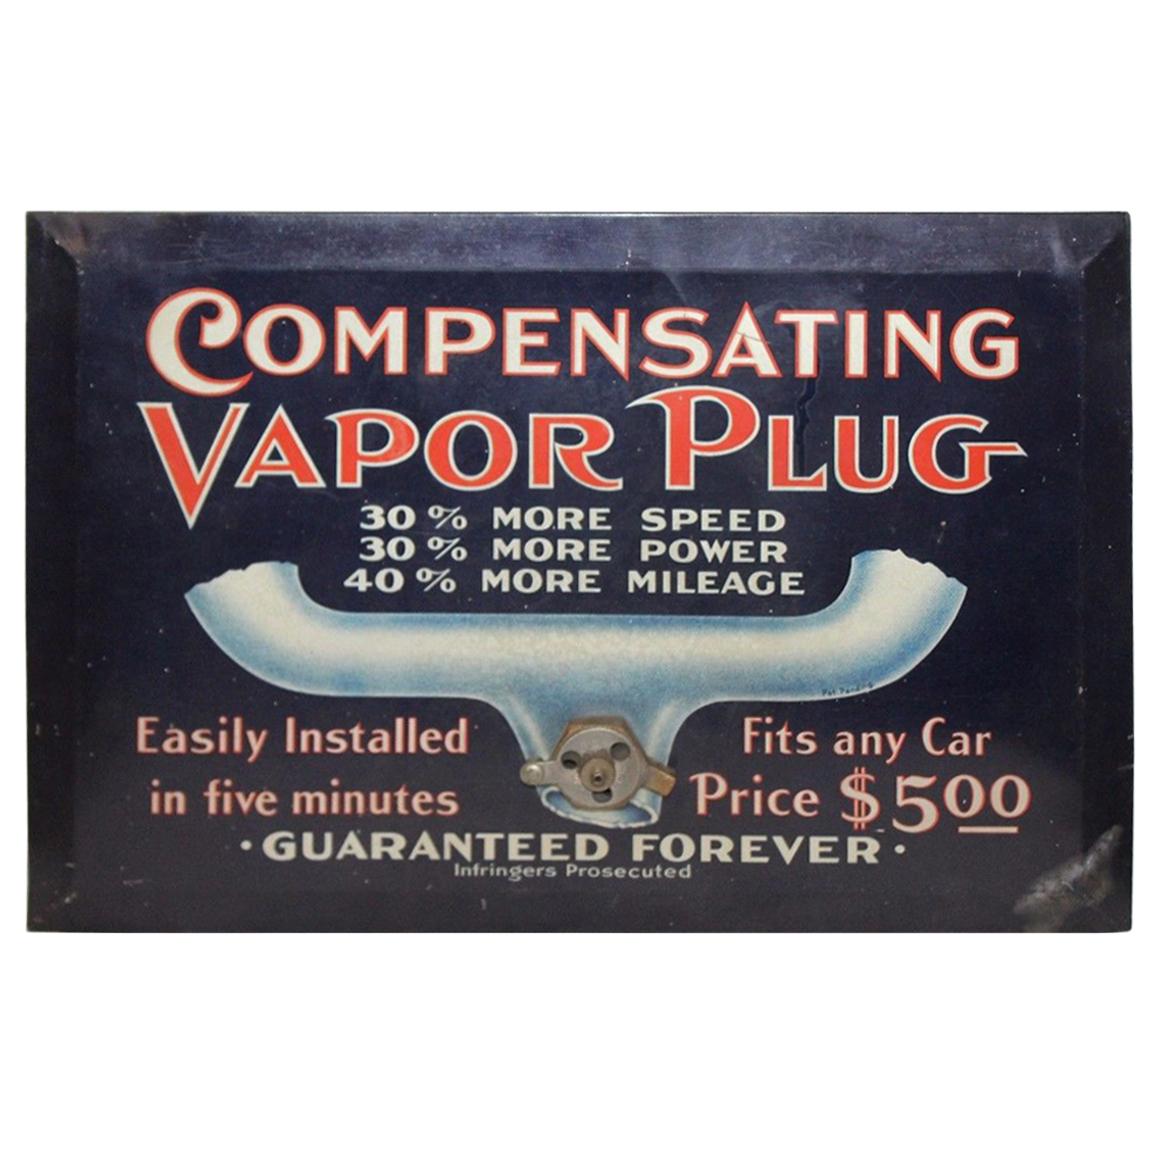 Original Compensating Vapor Plug Litho Advertising Sign For Sale